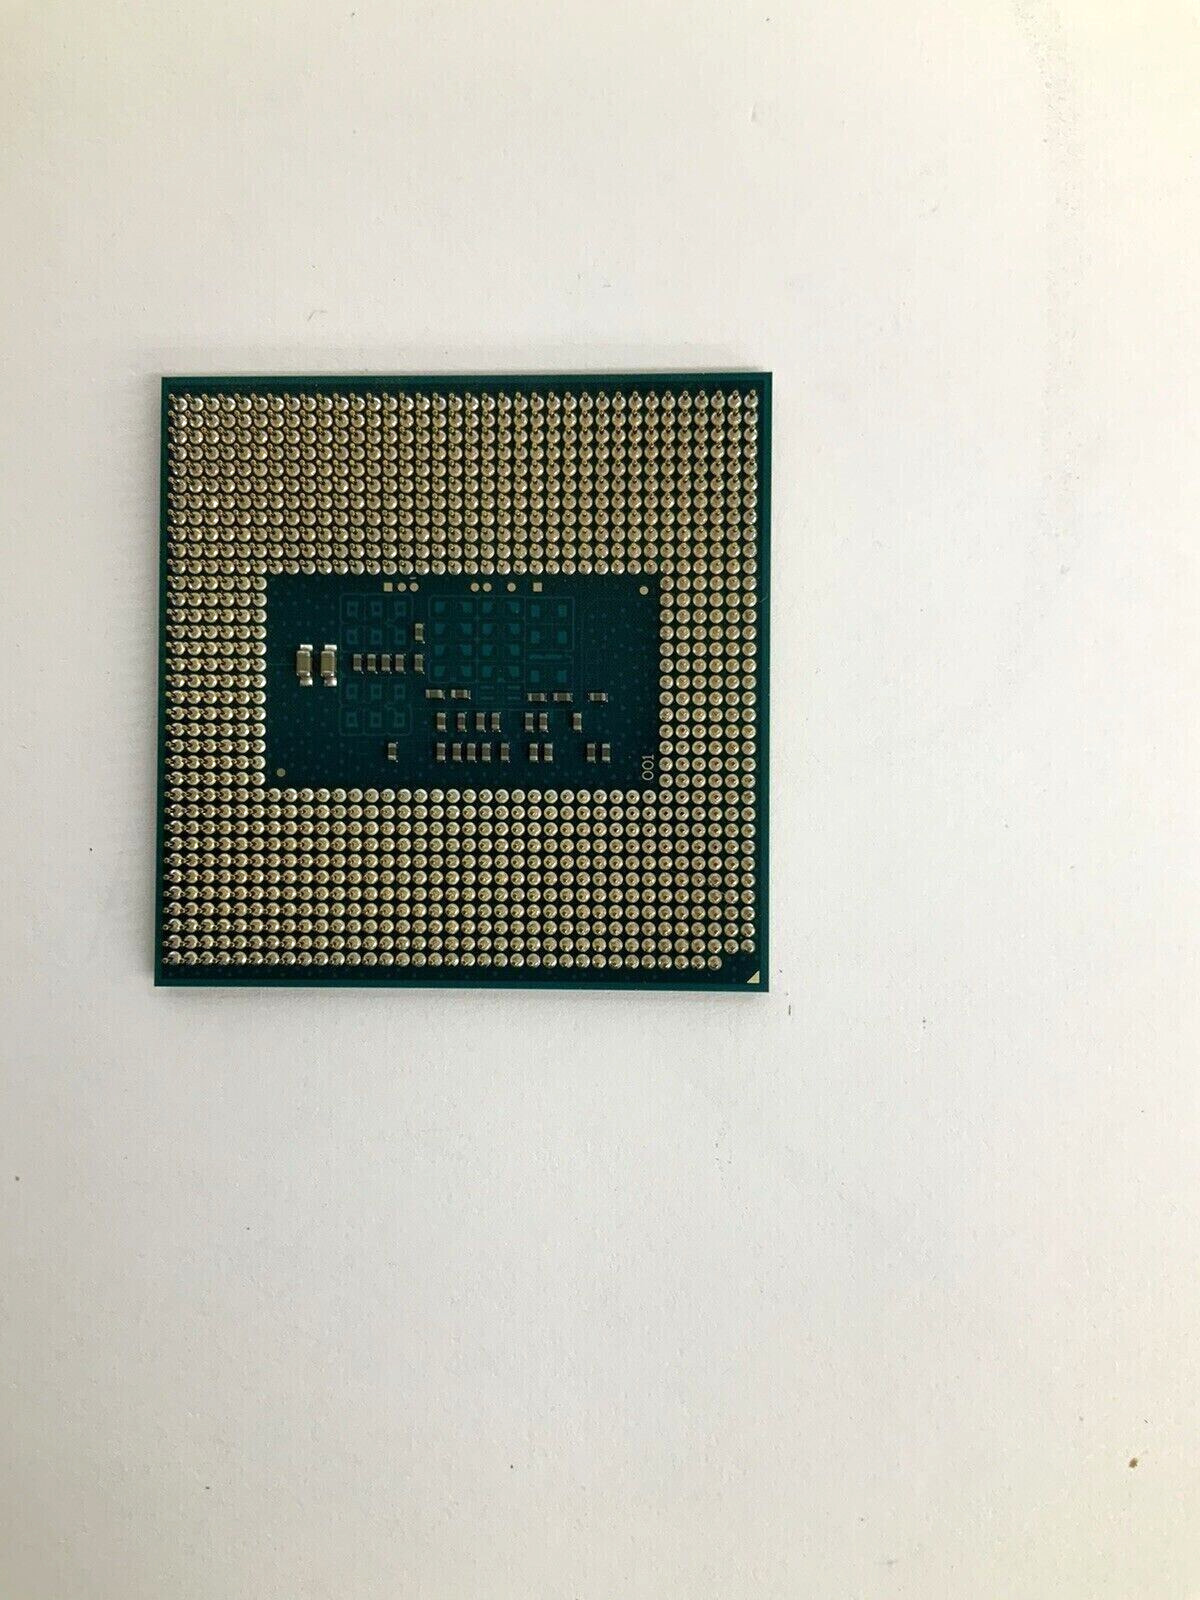 Intel Core i5-4300M 2.6GHz Socket G3 Laptop CPU SR1H9